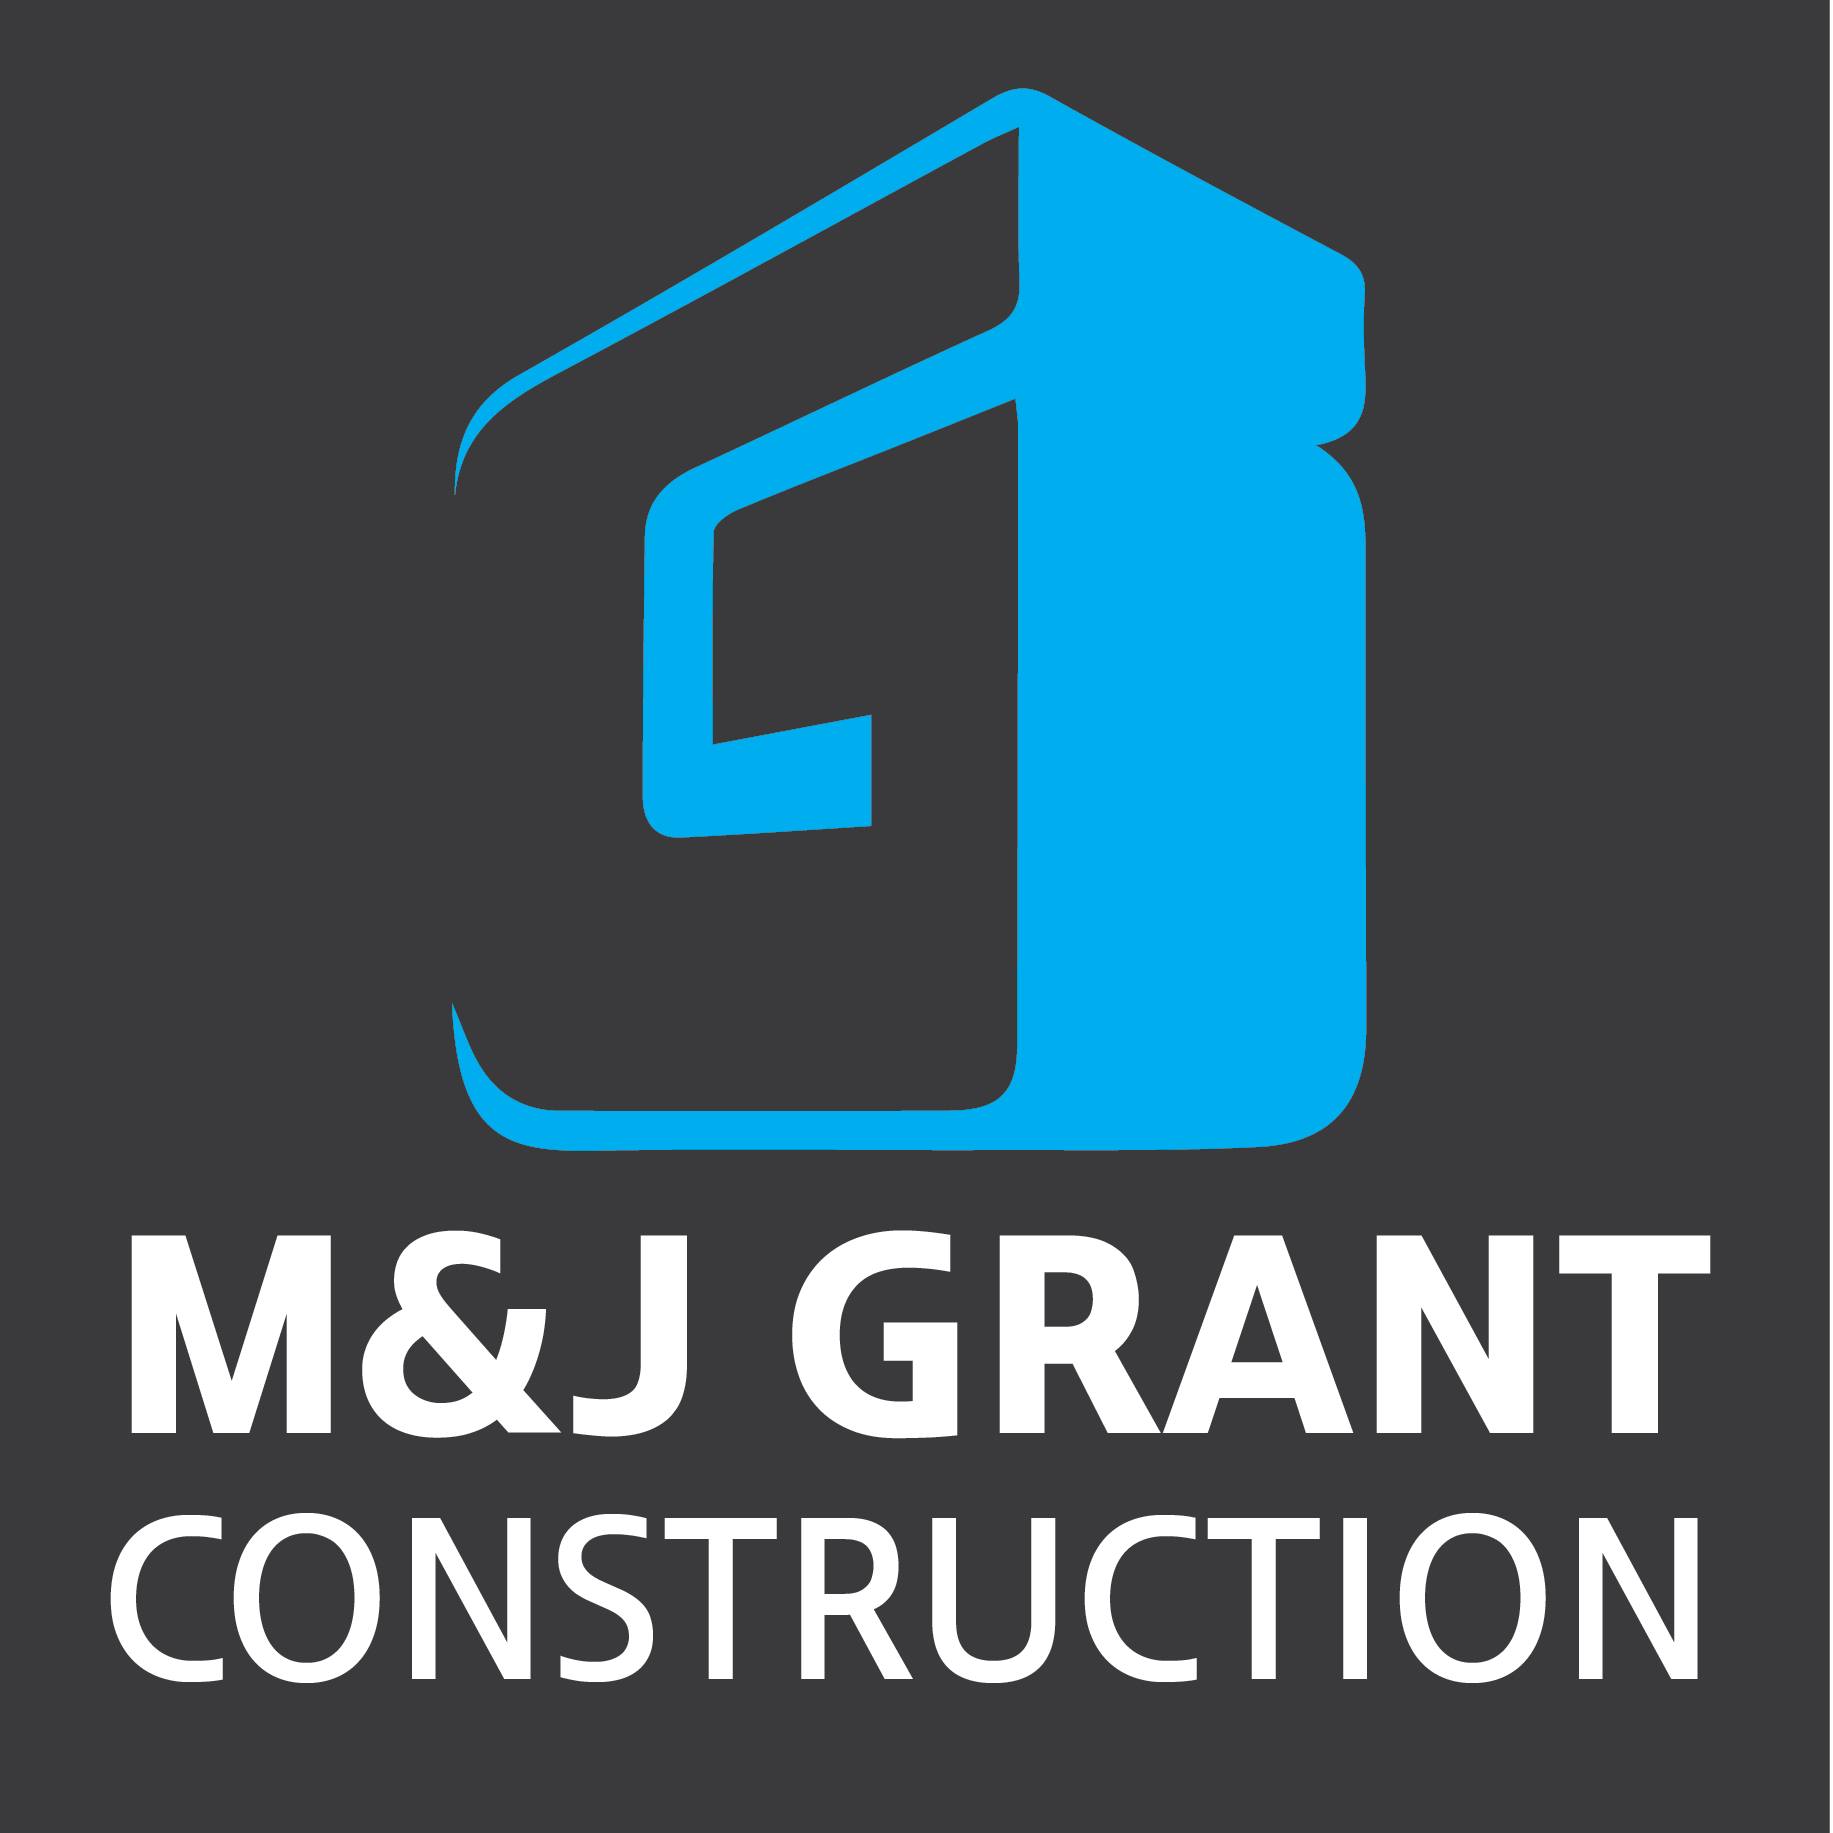 M & J Grant Construction